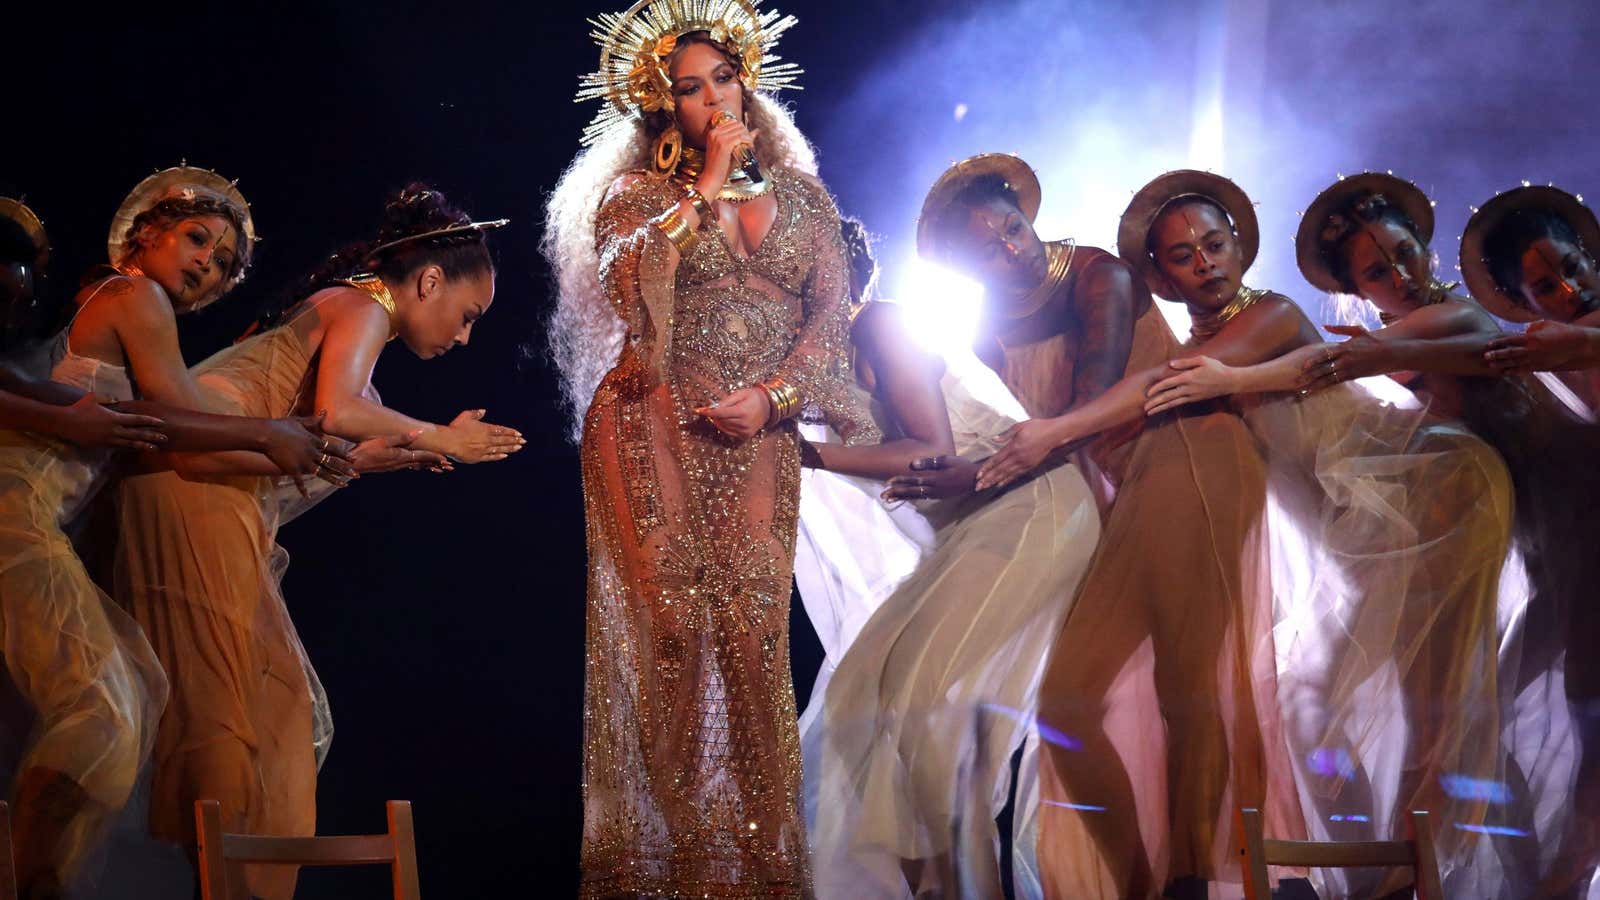 Beyonce has help that I don’t have, writes Bobbi Dempsey.